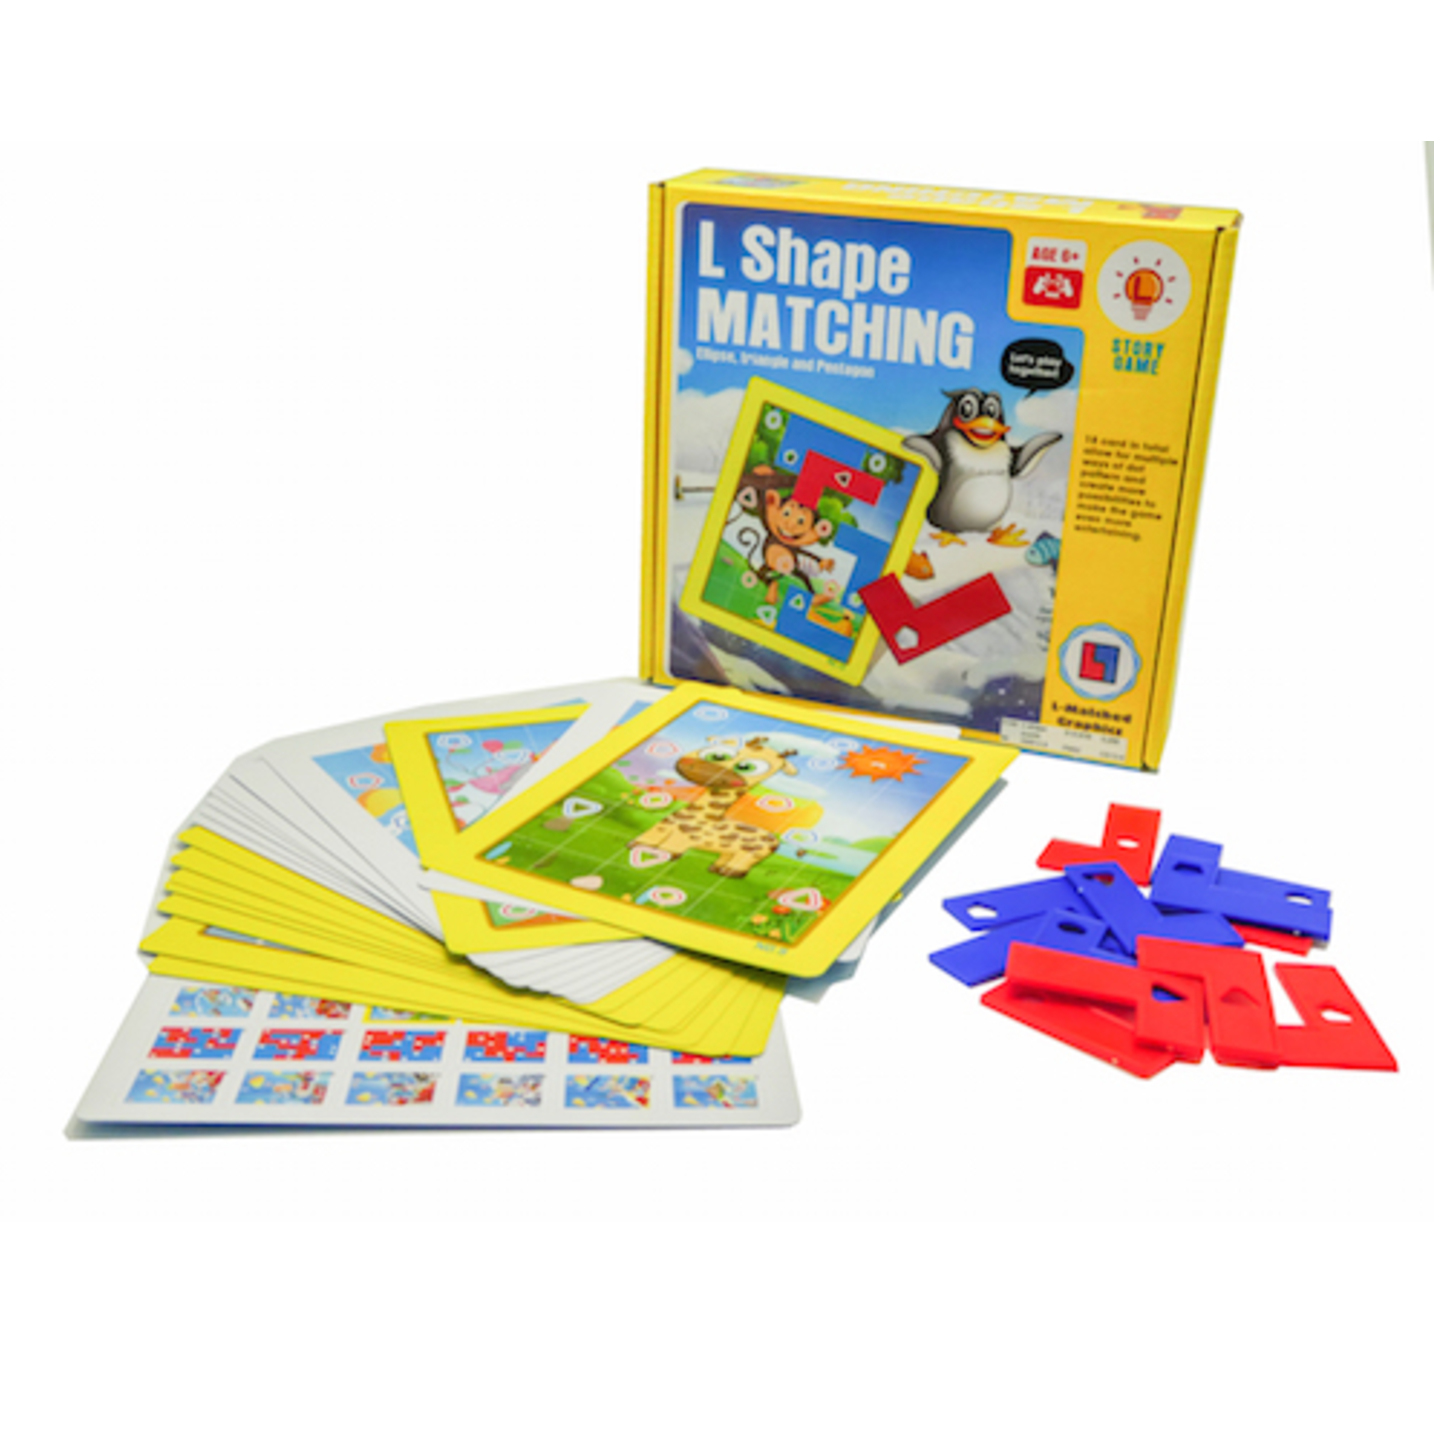 Play N Learn L Shape Matching Strategic Family Board Game